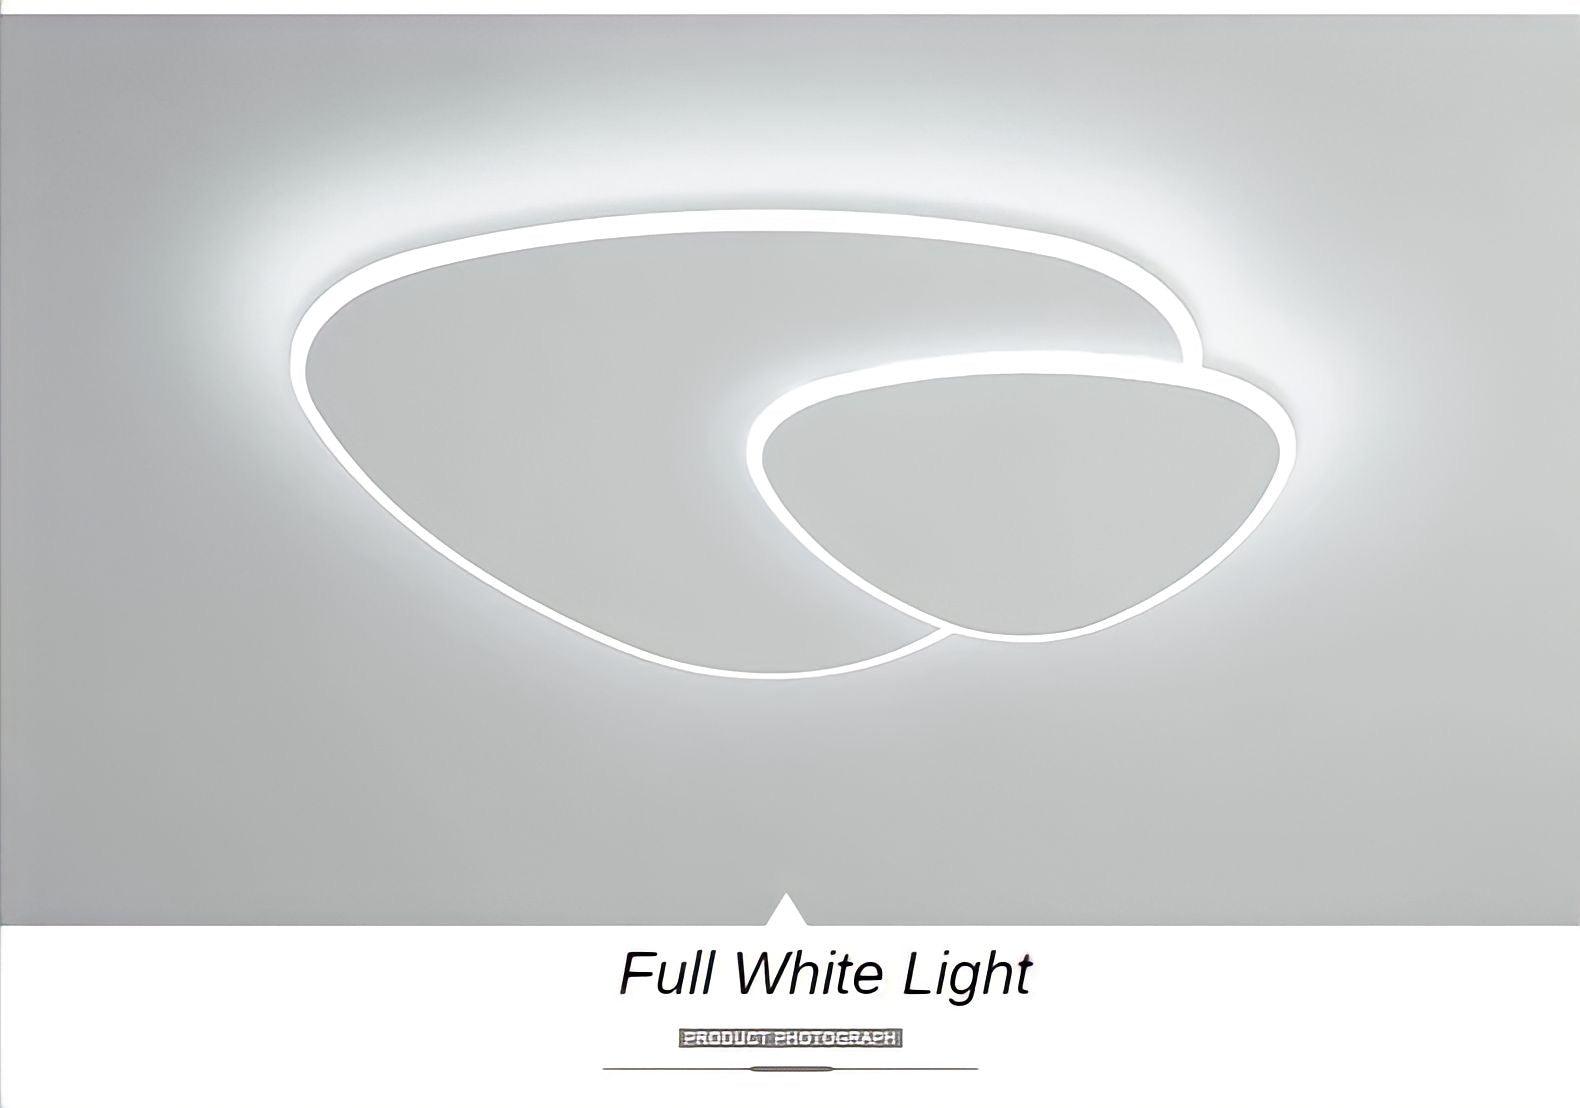 LED Deckenlampe Minimalism - BUYnBLUE 